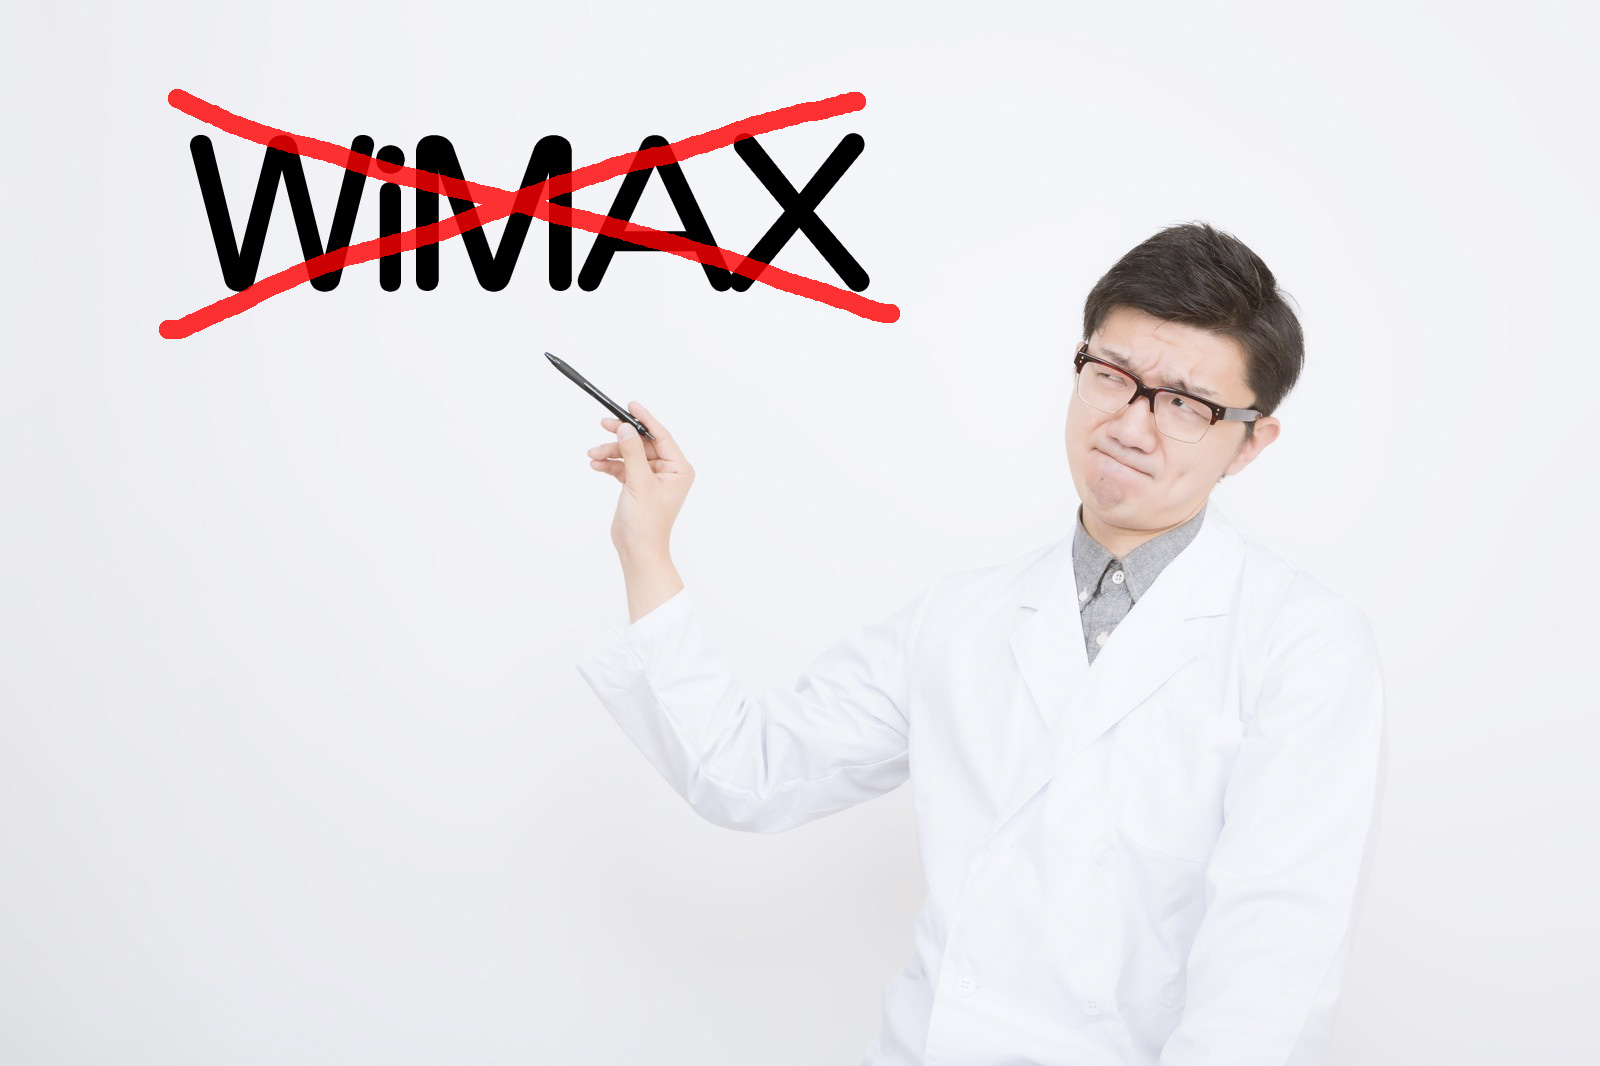 wimaxのポケットkWiFiは禁止